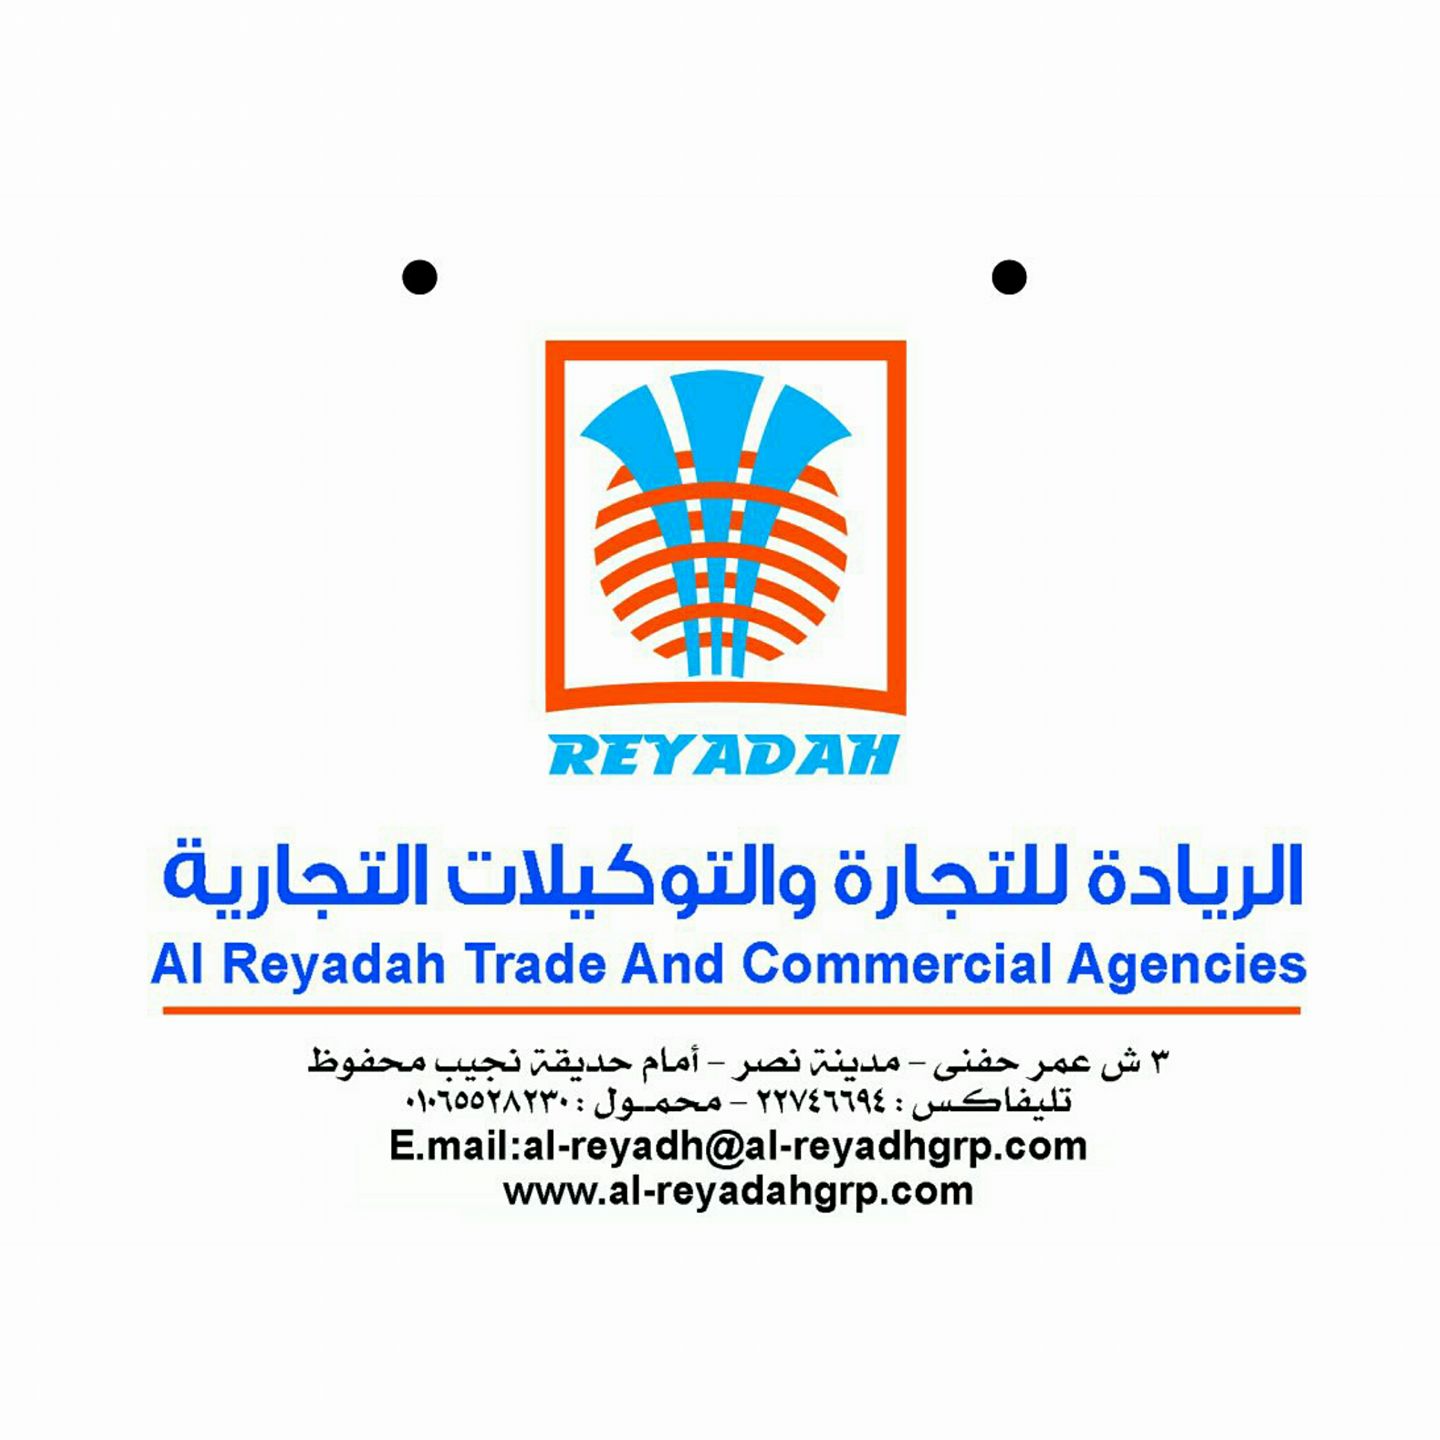 Al Reyada Company for Trade and Commercial Agencies